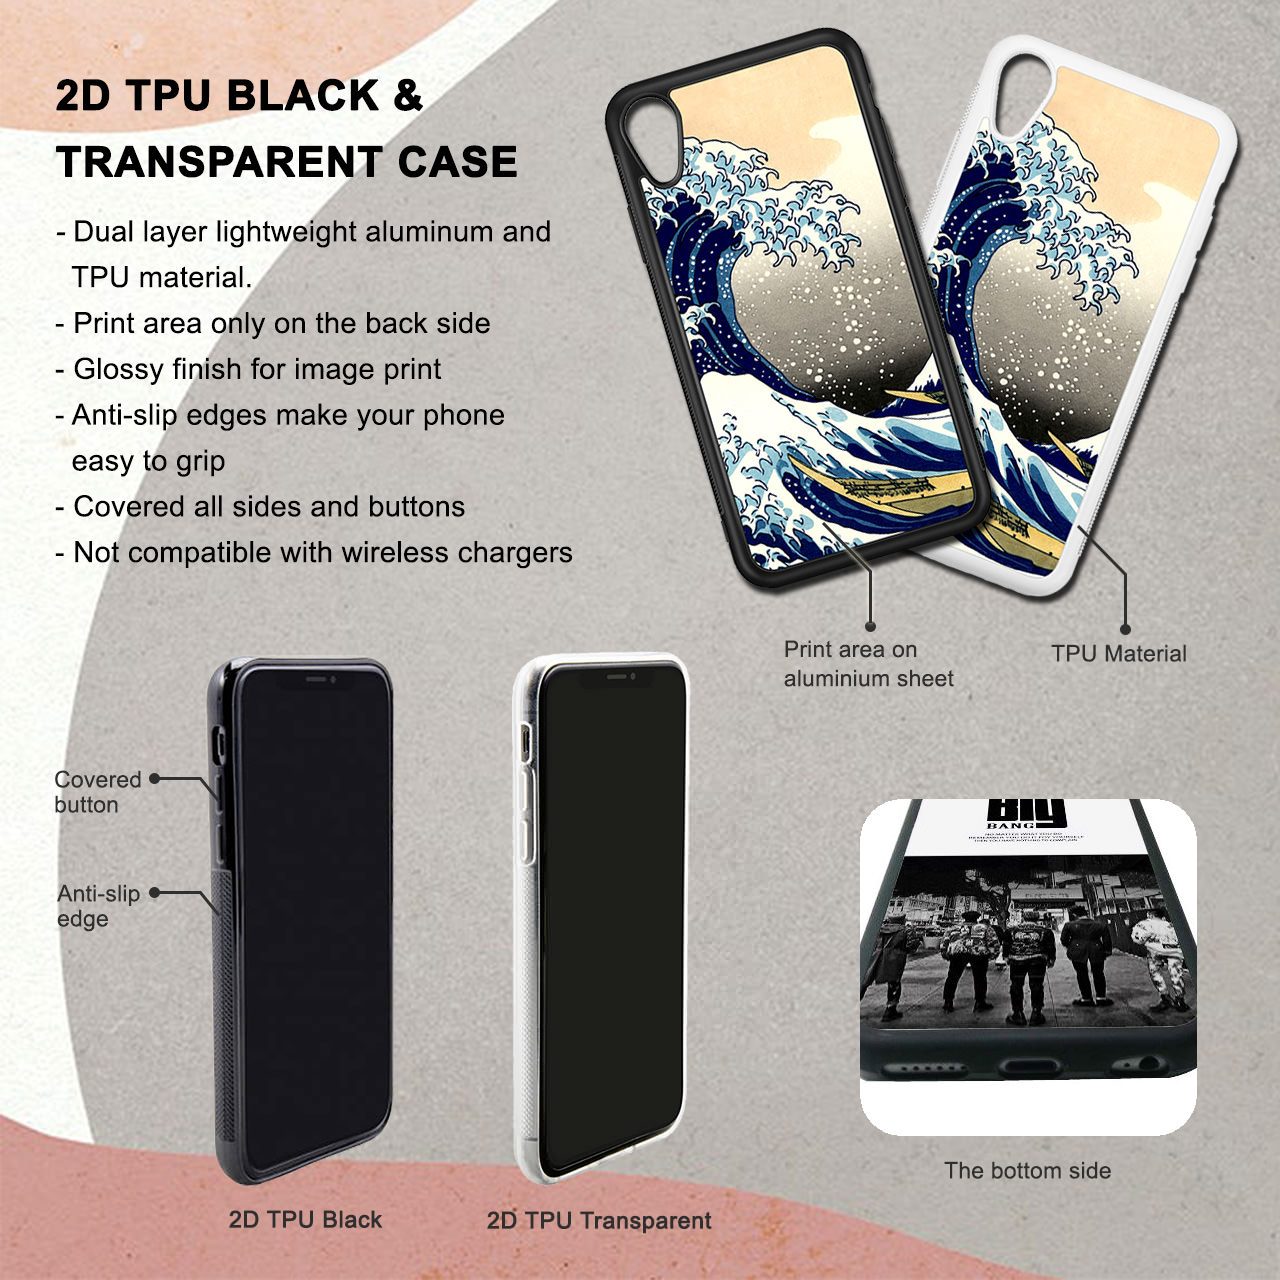 Dauntless Divergent Faction iPhone 6/6S Case